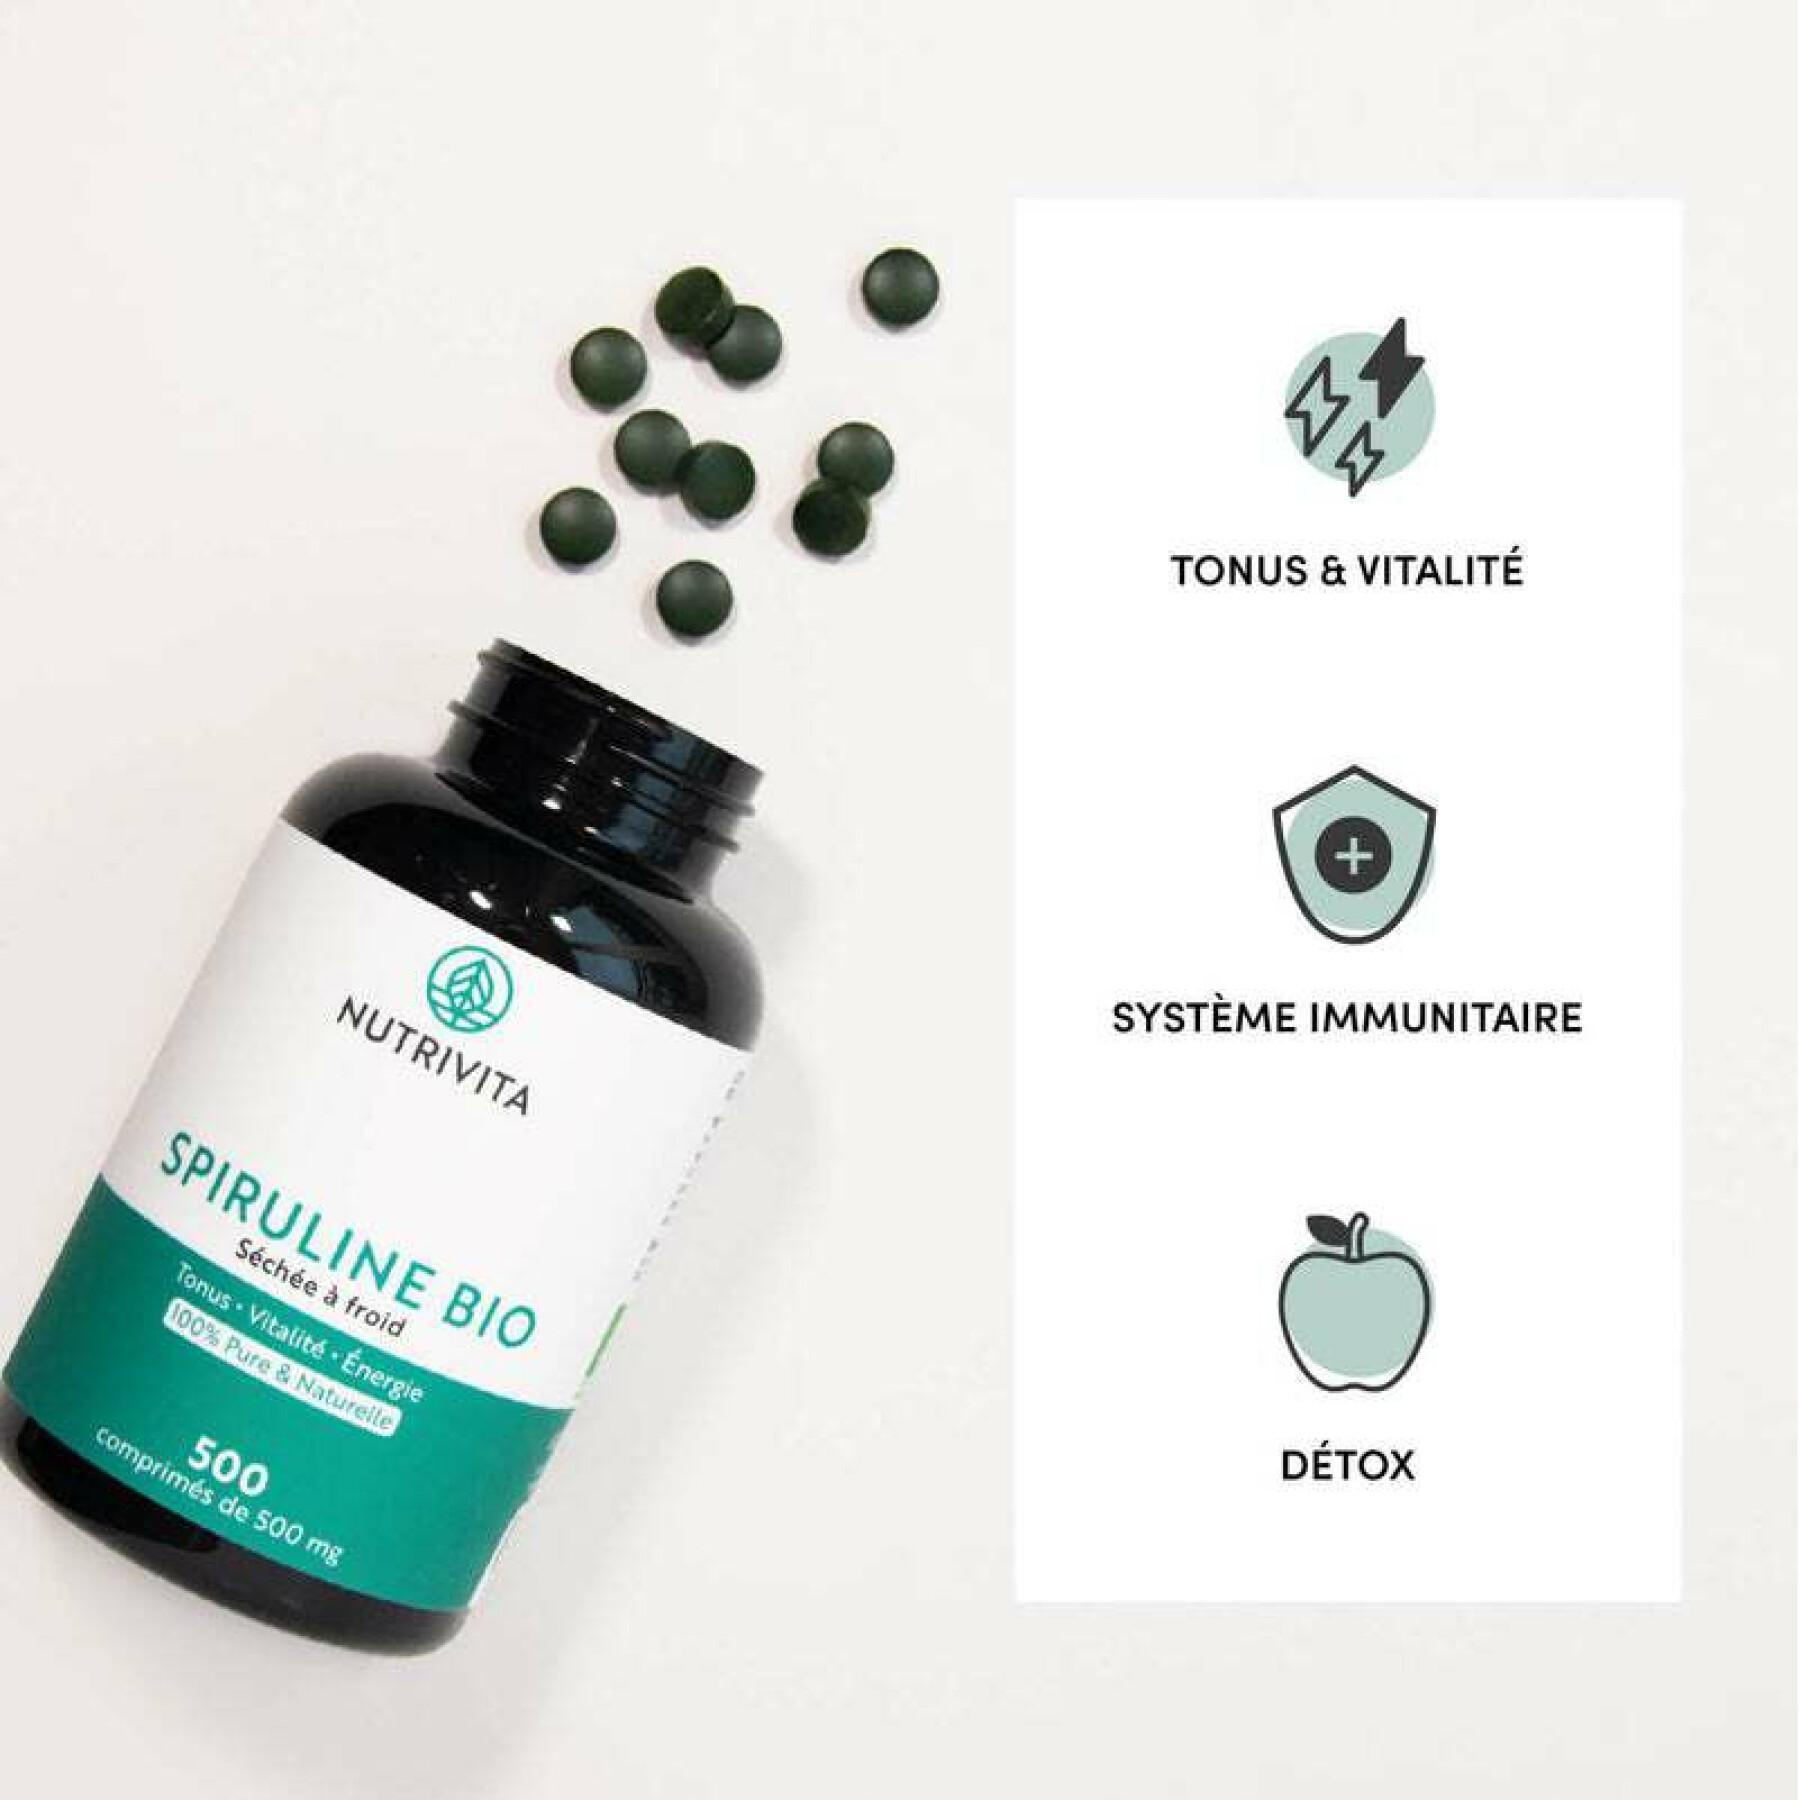 Organiczna Spirulina Suplement diety - 500 tabletek Nutrivita